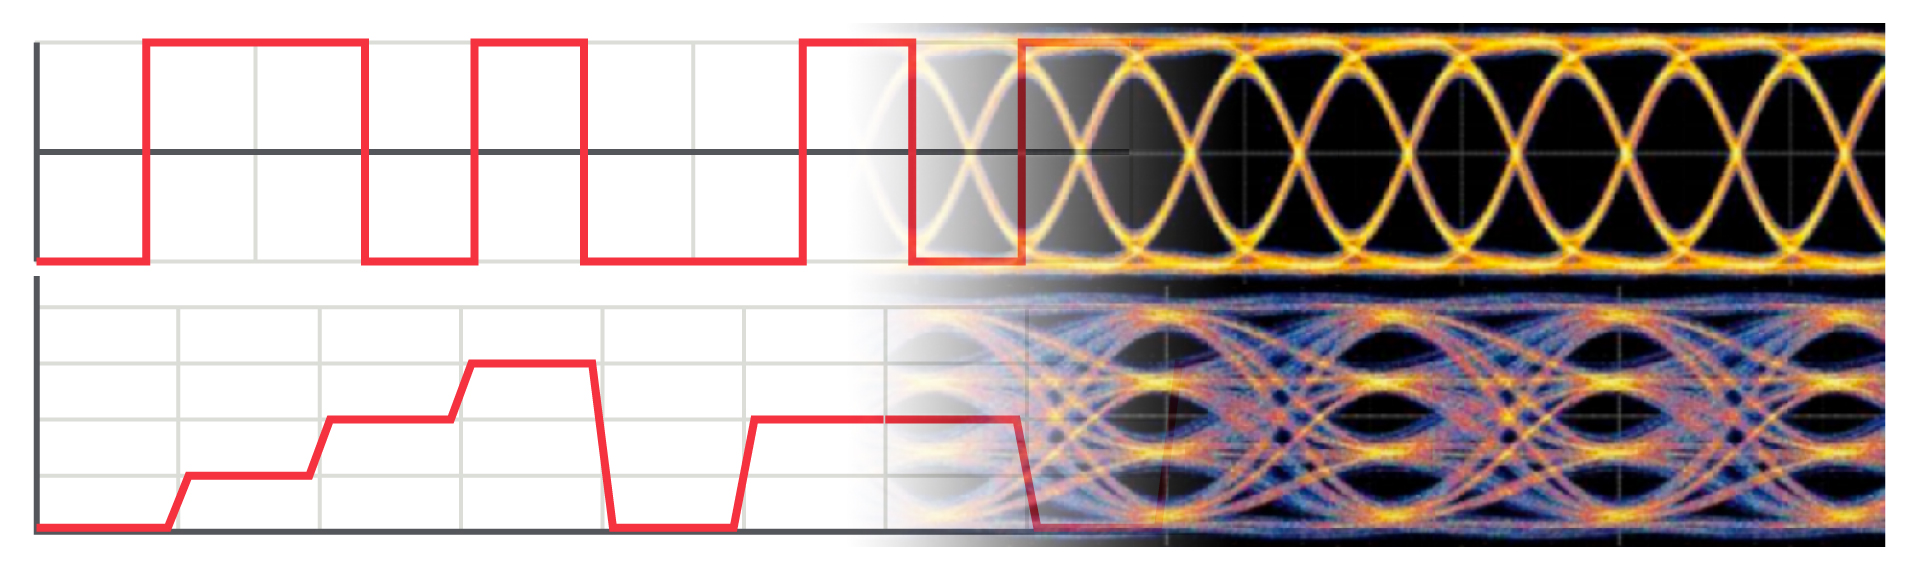 Logic eye diagram NRZ vs PAM4